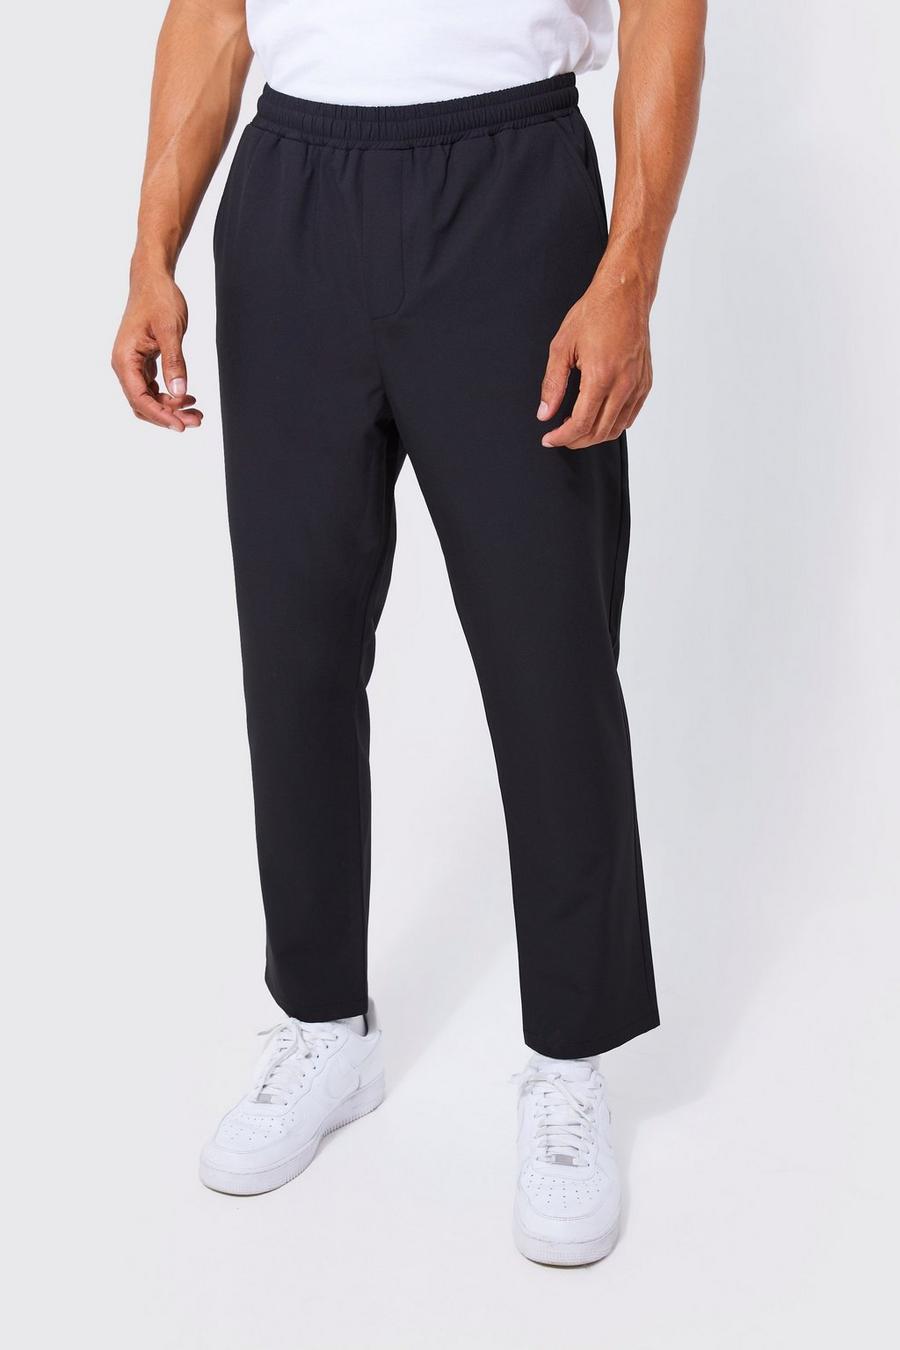 Pantaloni Smart affusolati elasticizzati in 4 Way Stretch, Black